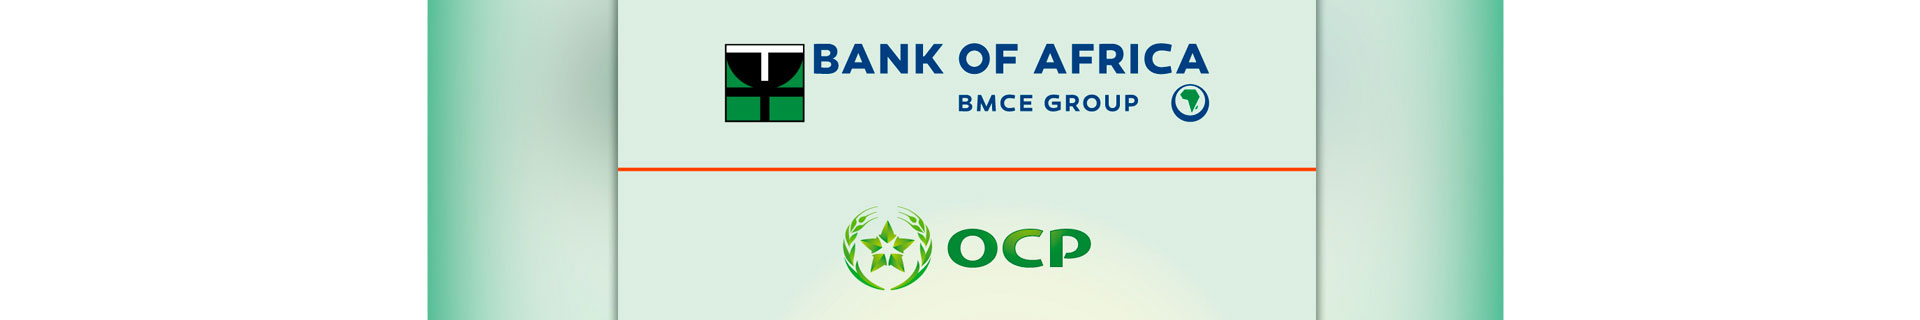 Important partenariat OCP / BANK OF AFRICA